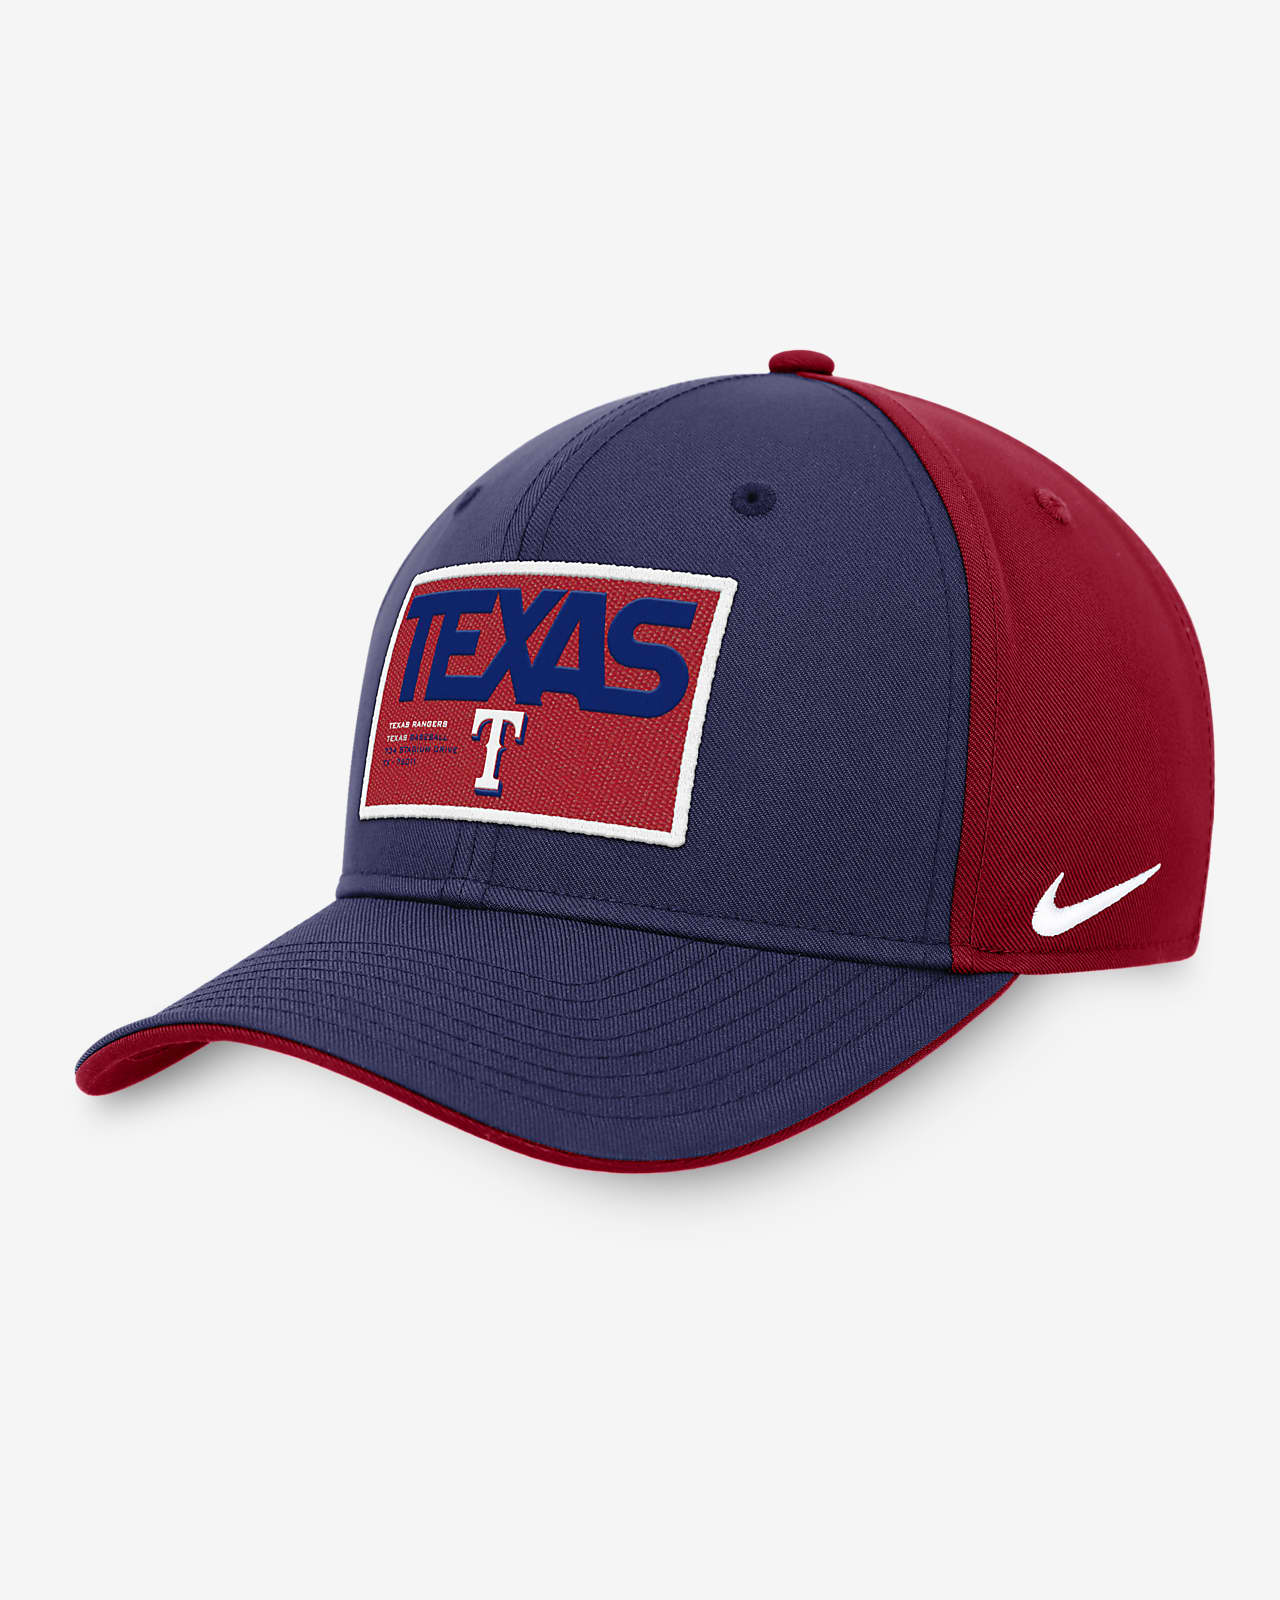 Rangers Hat, Texas Rangers Hats, Baseball Caps